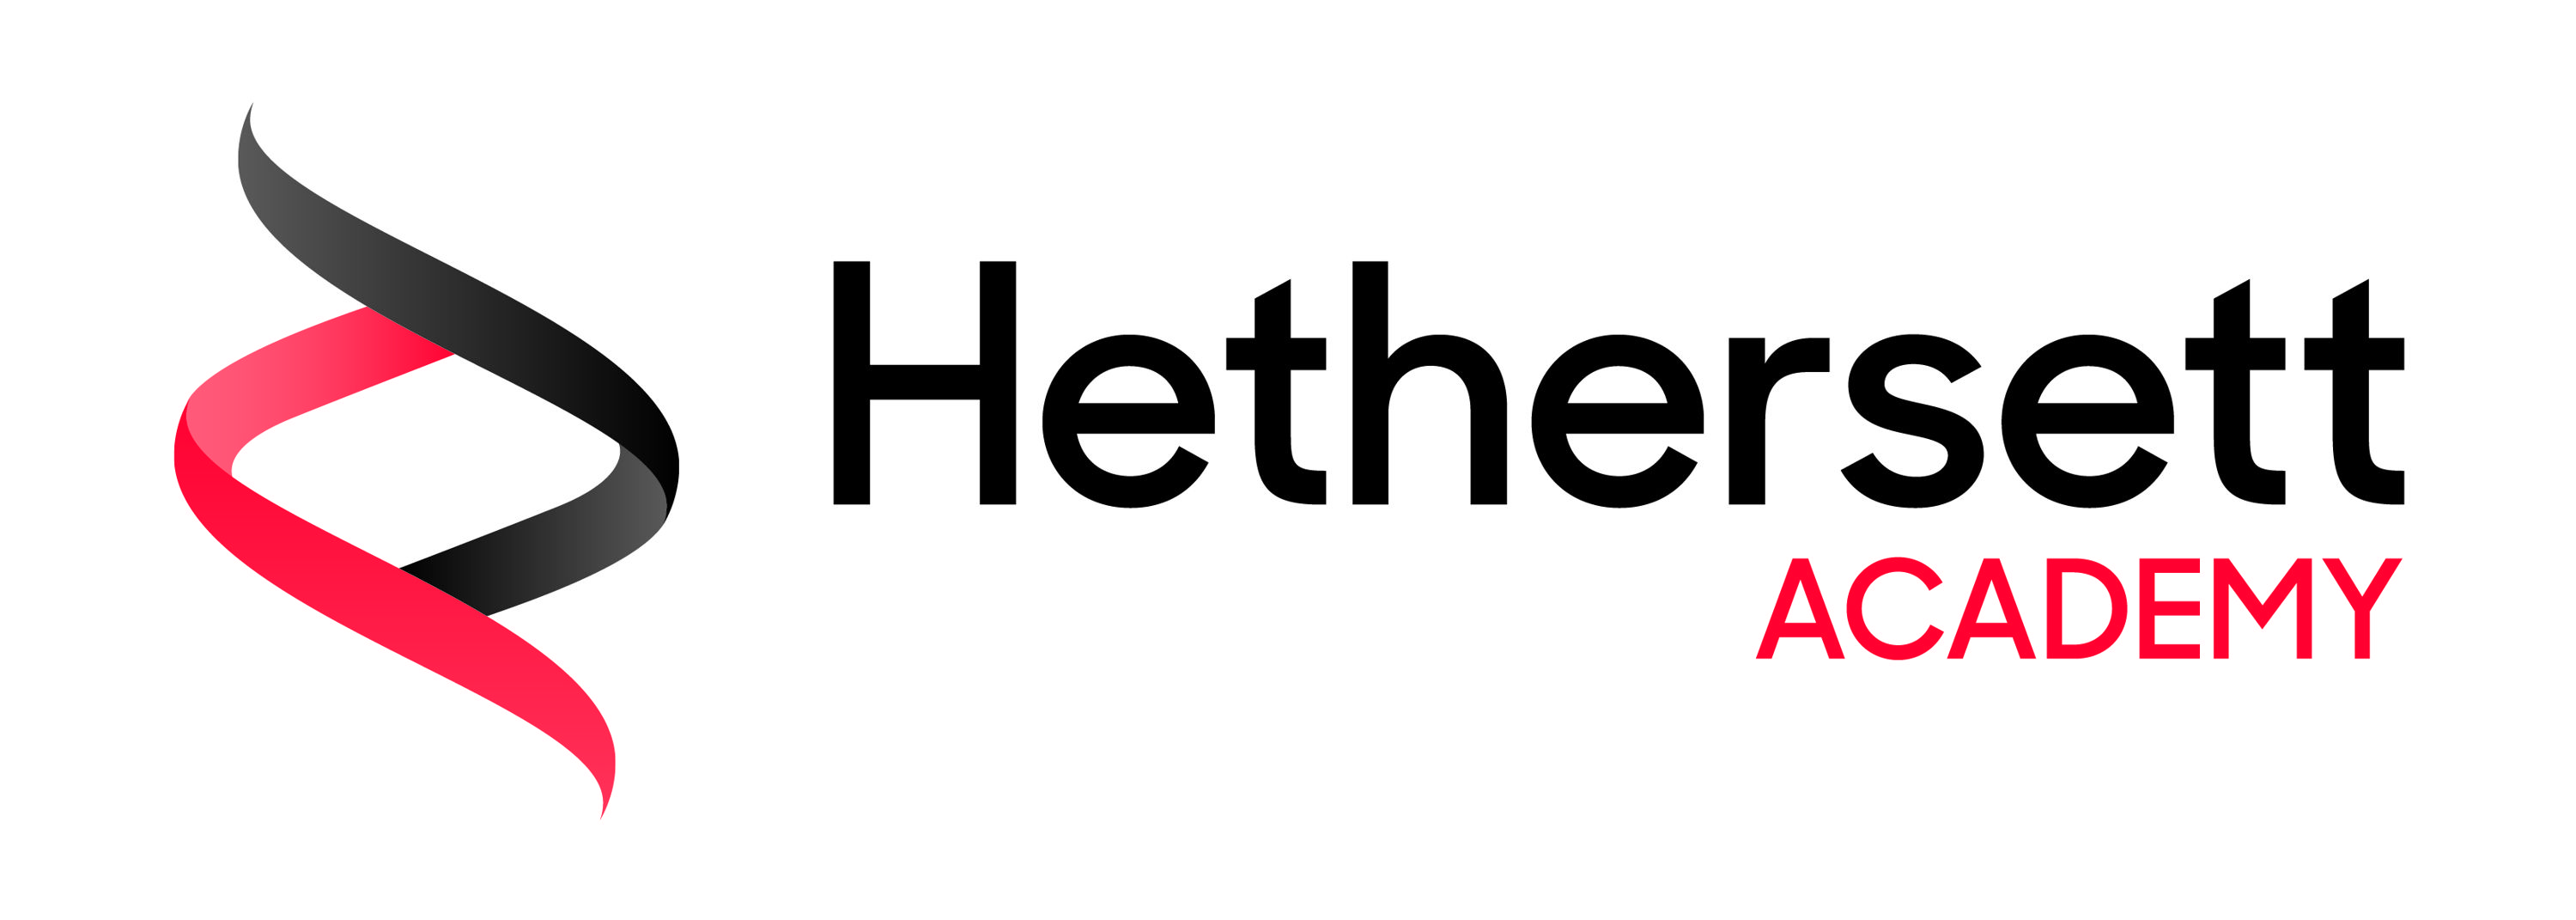 Hethersett Academy